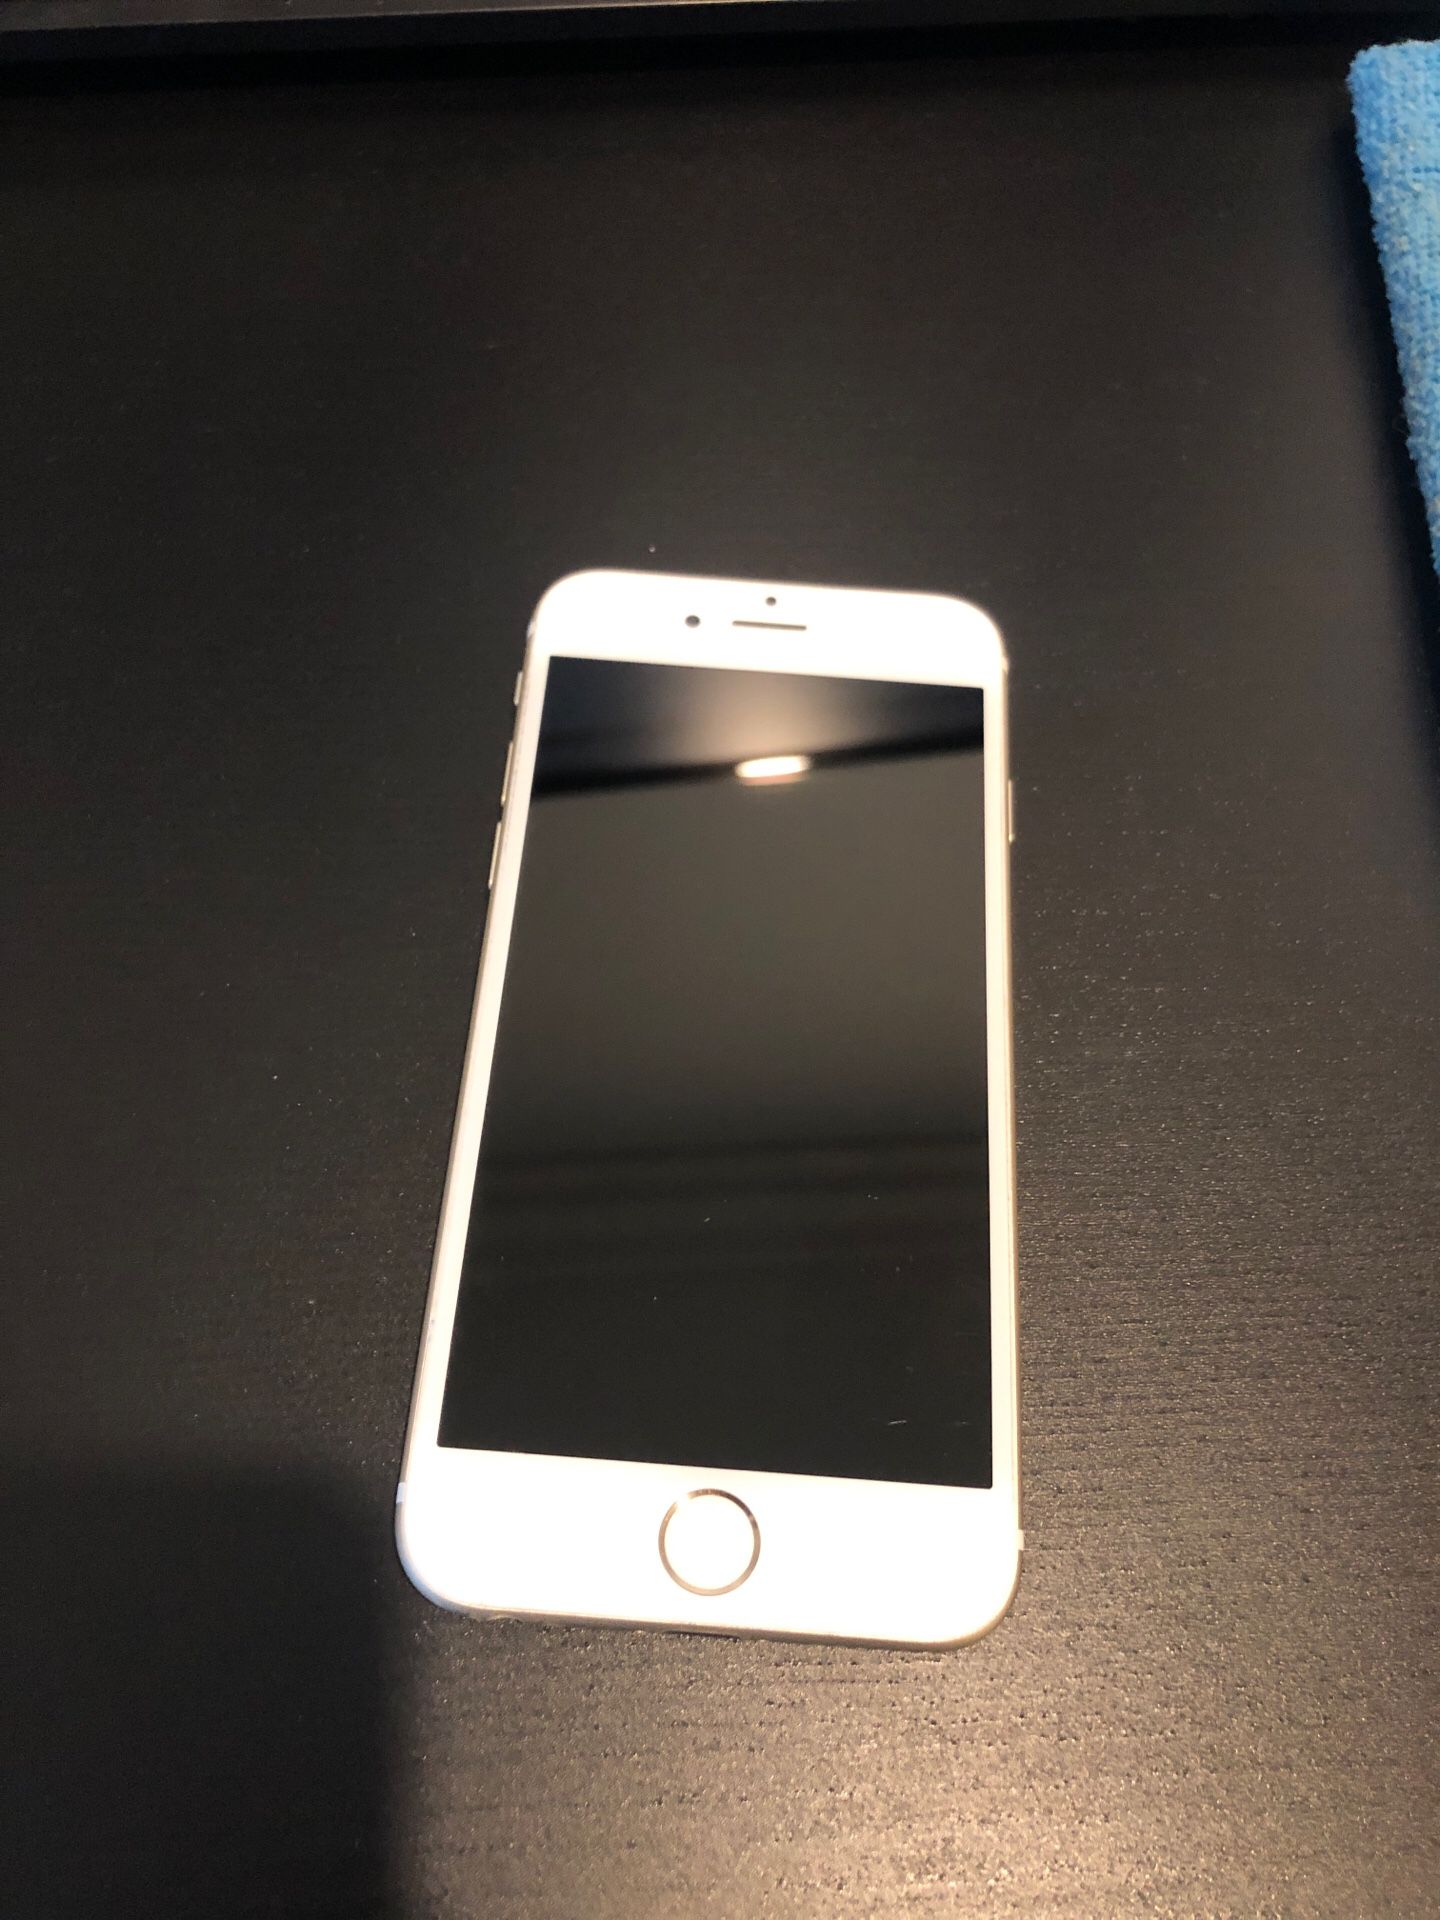 iPhone 6 Unlocked - $100